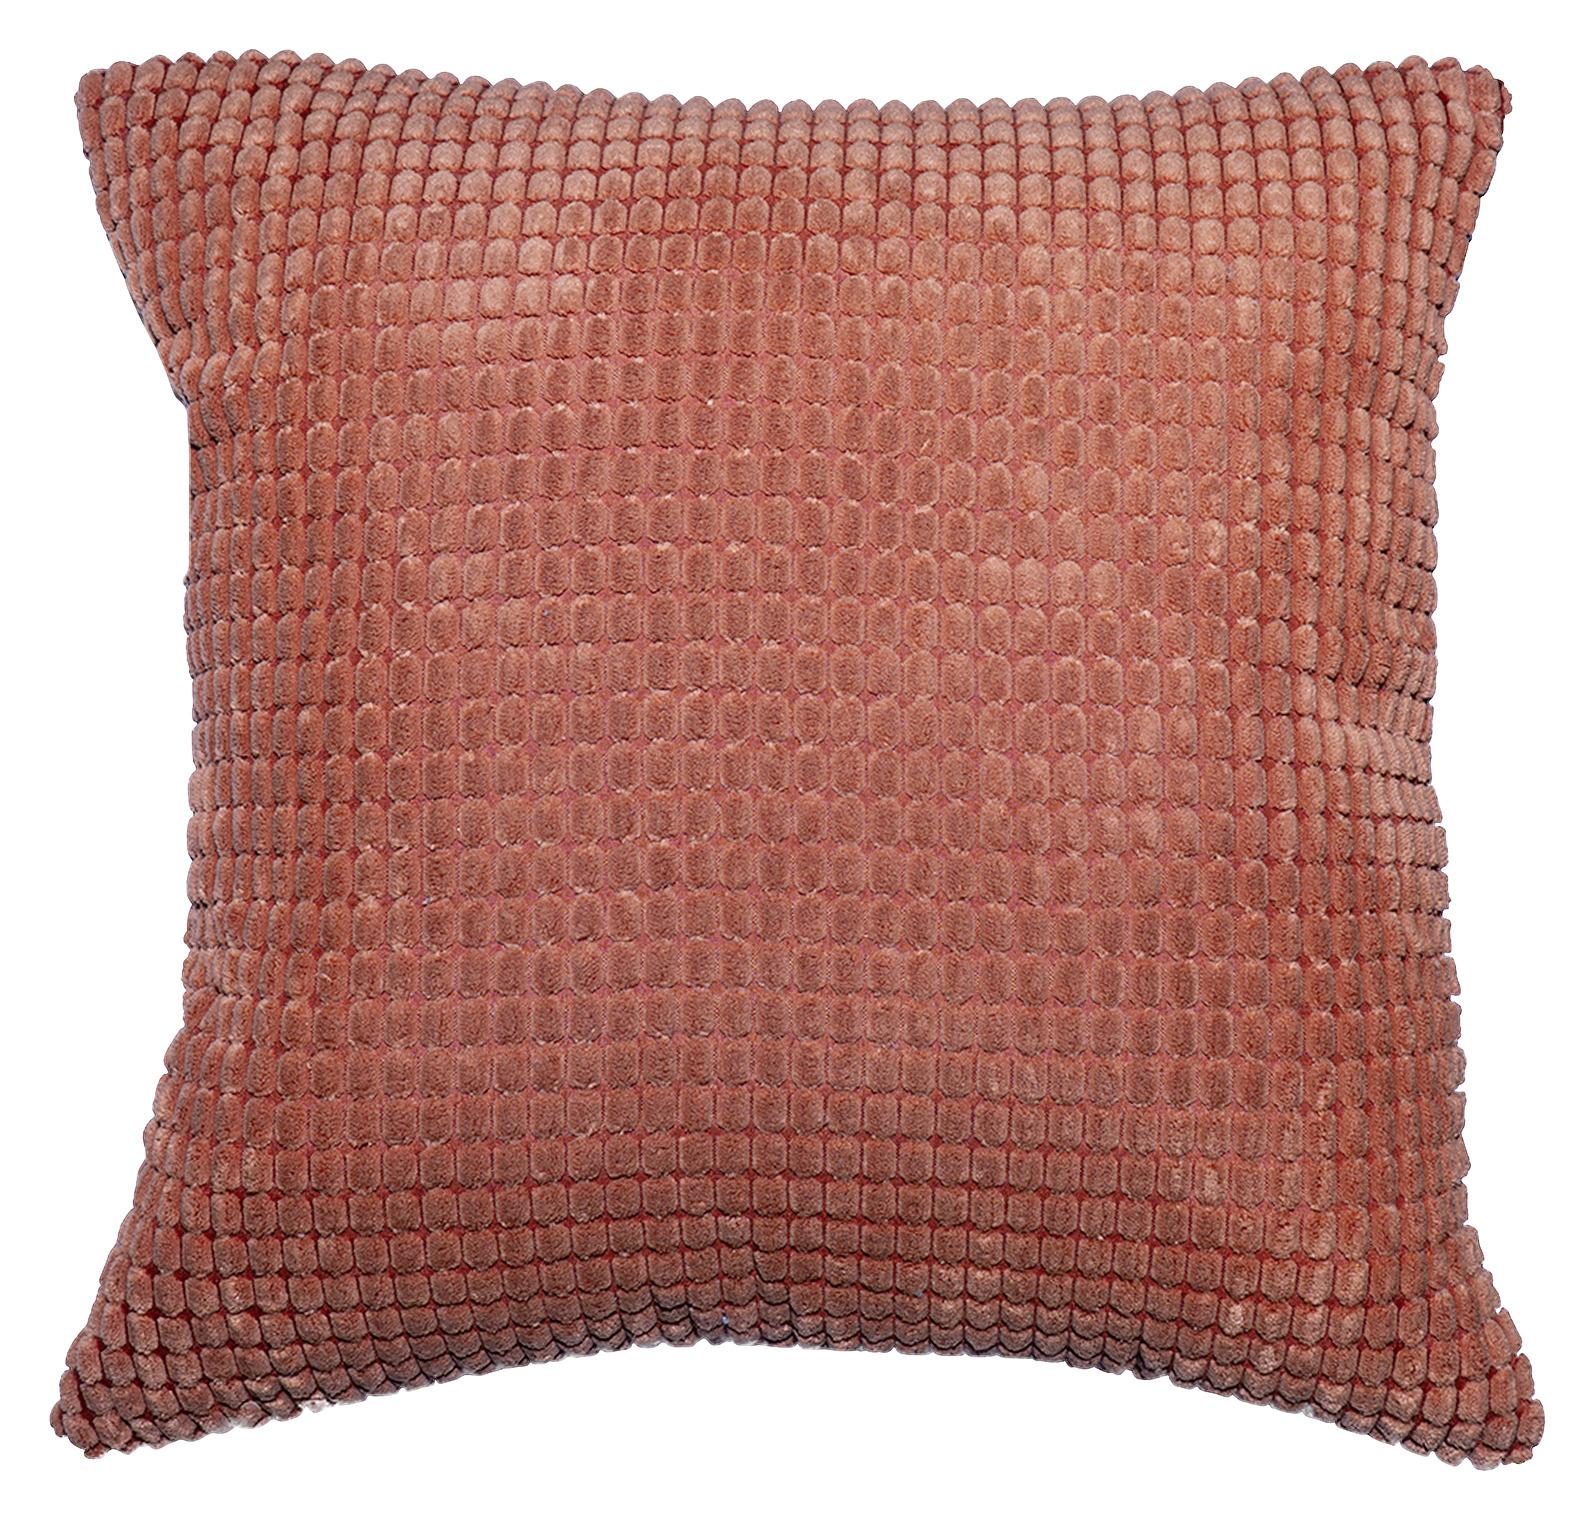 Zierkissen Halina 45x45 cm Fleece Coralle mit Zipp - Orange, MODERN, Textil (45/45cm) - Luca Bessoni